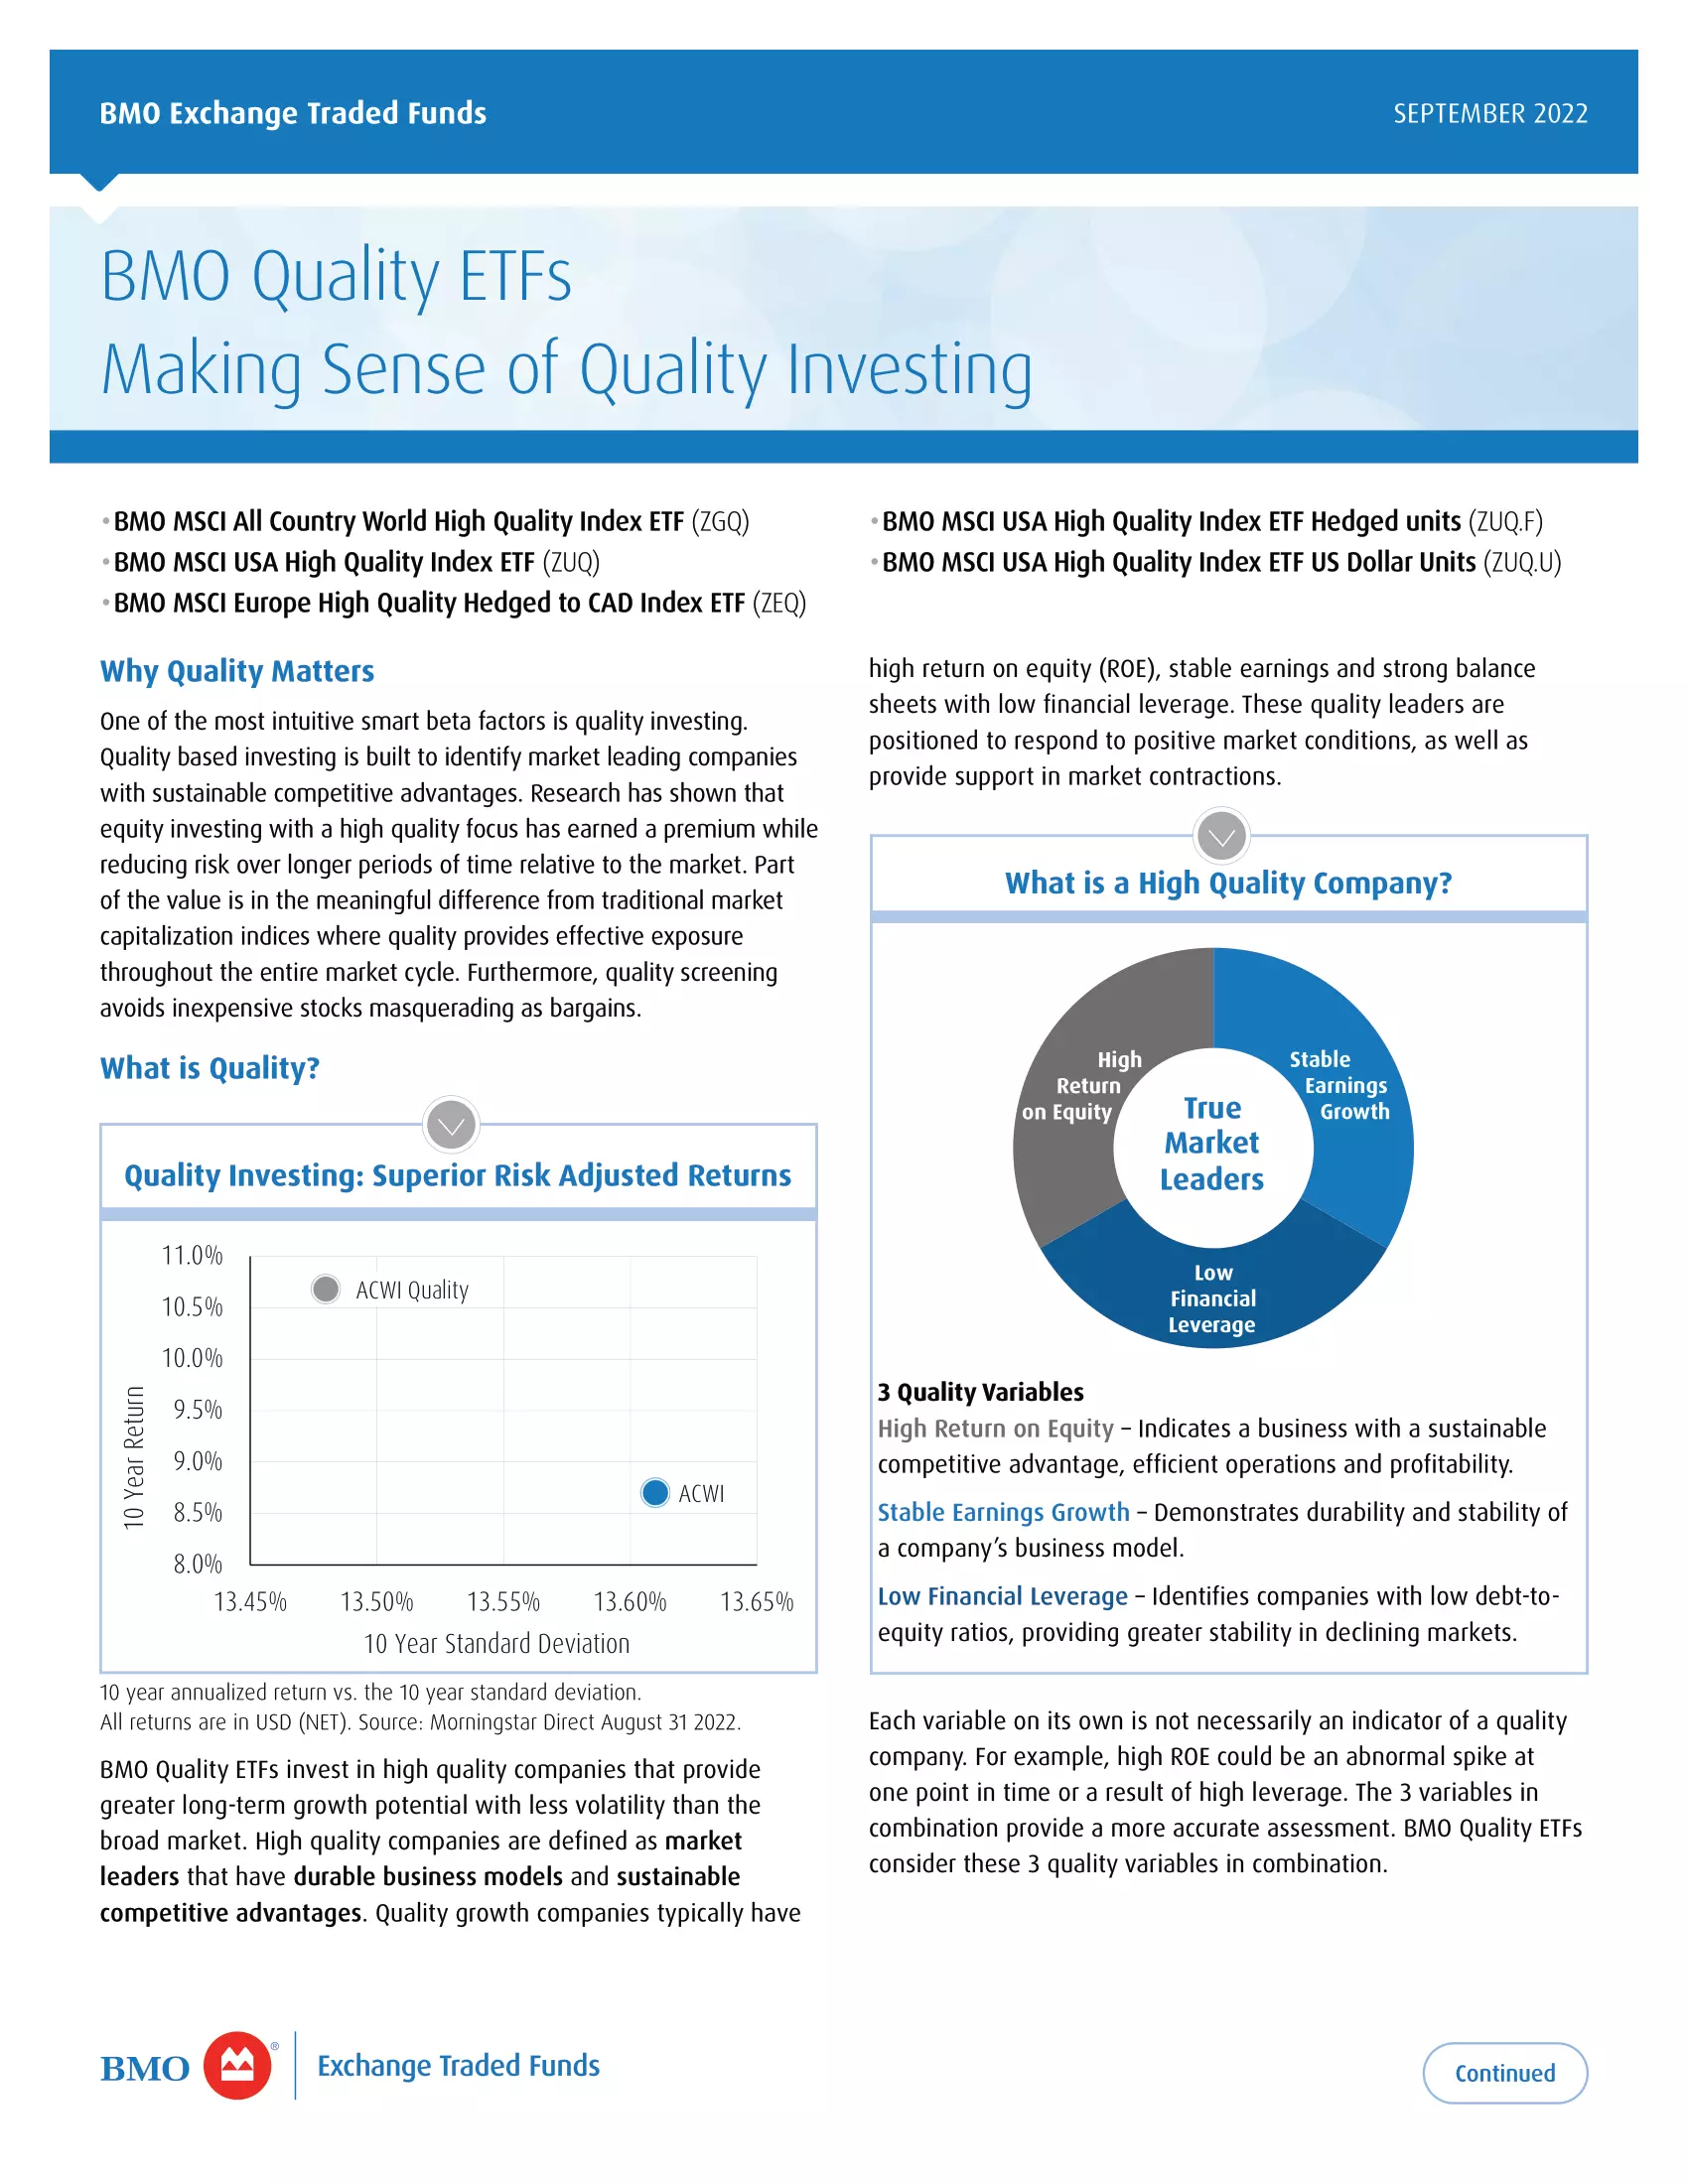 ZGQ: BMO MSCI All Country World High Quality Index ETF